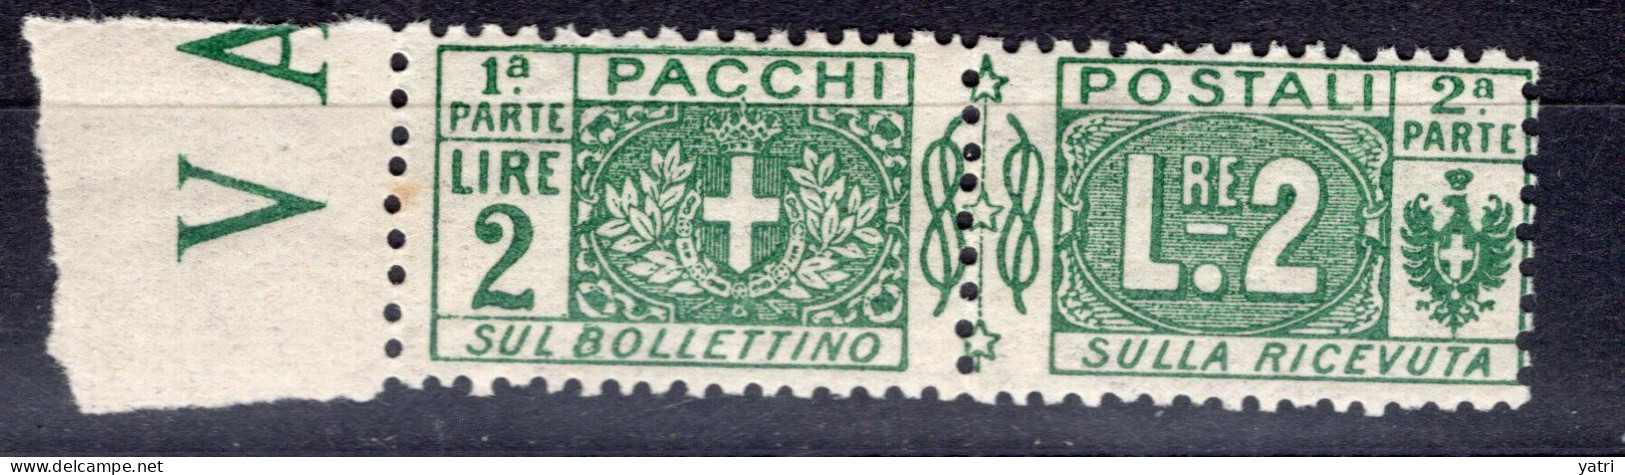 Regno D'Italia (1914) - Pacchi Postali - 2 Lire ** - Postal Parcels